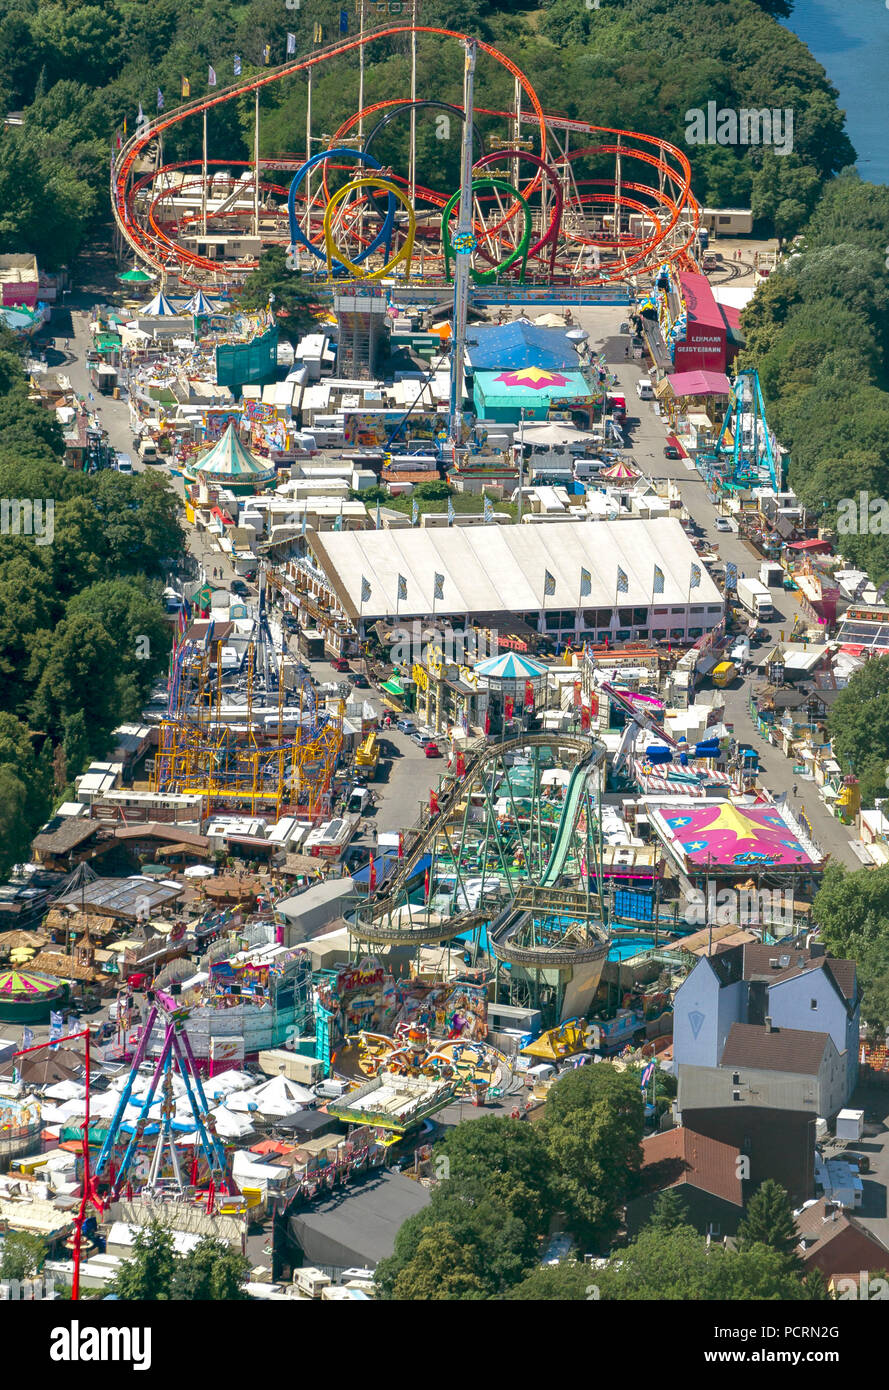 Fairground Crange, Cranger Kirmes, aerial photo of Herne, aerial photo Stock Photo